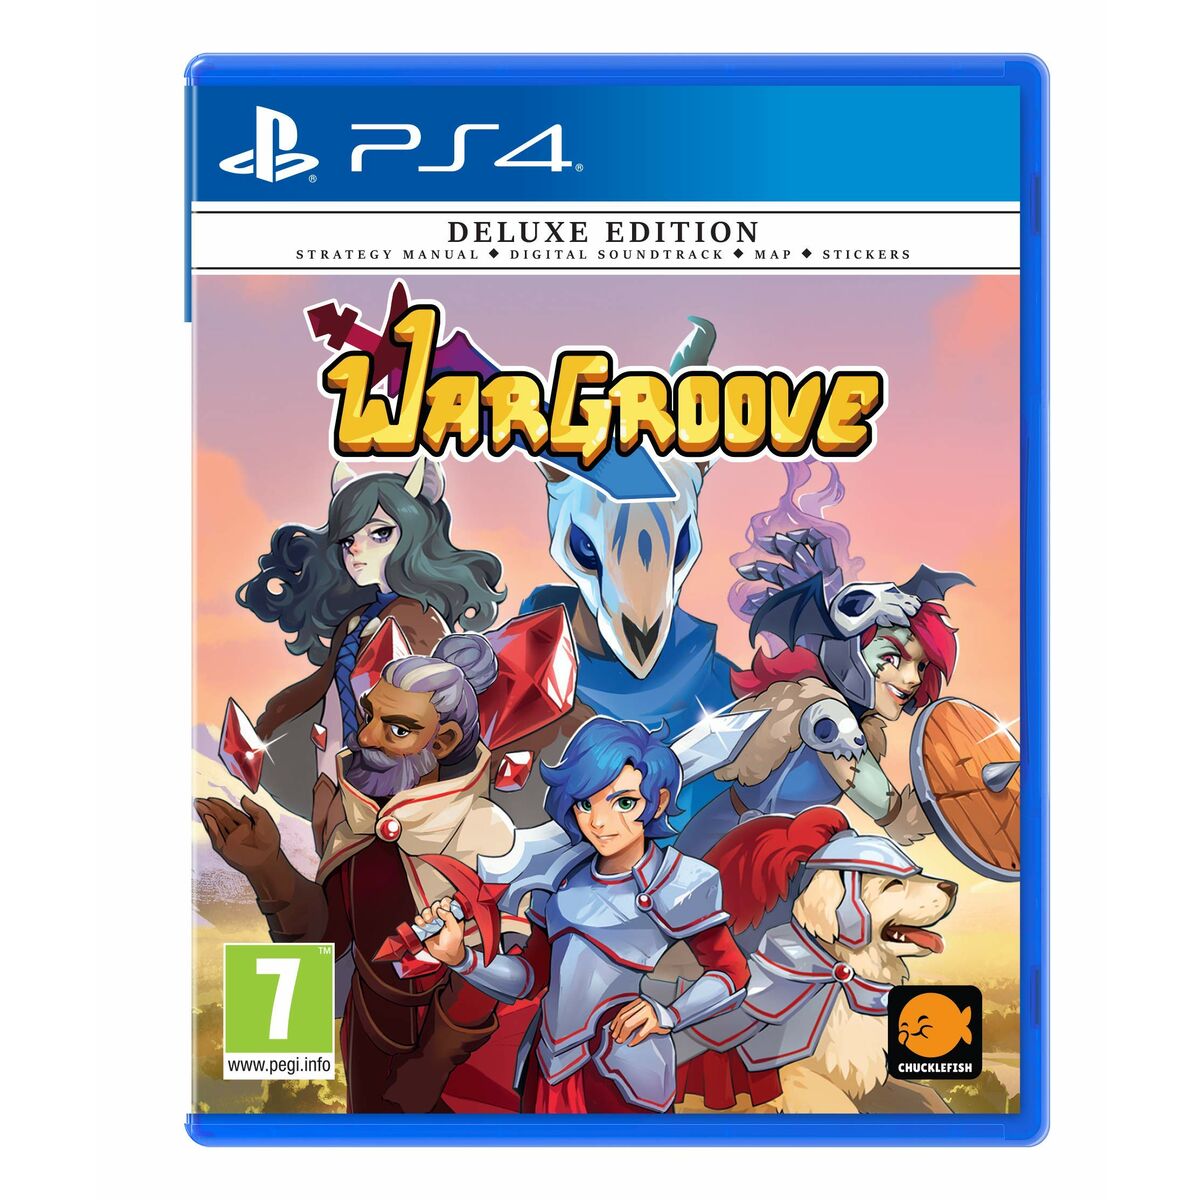 Jeu vidéo PlayStation 4 Wargroove: Deluxe Edition